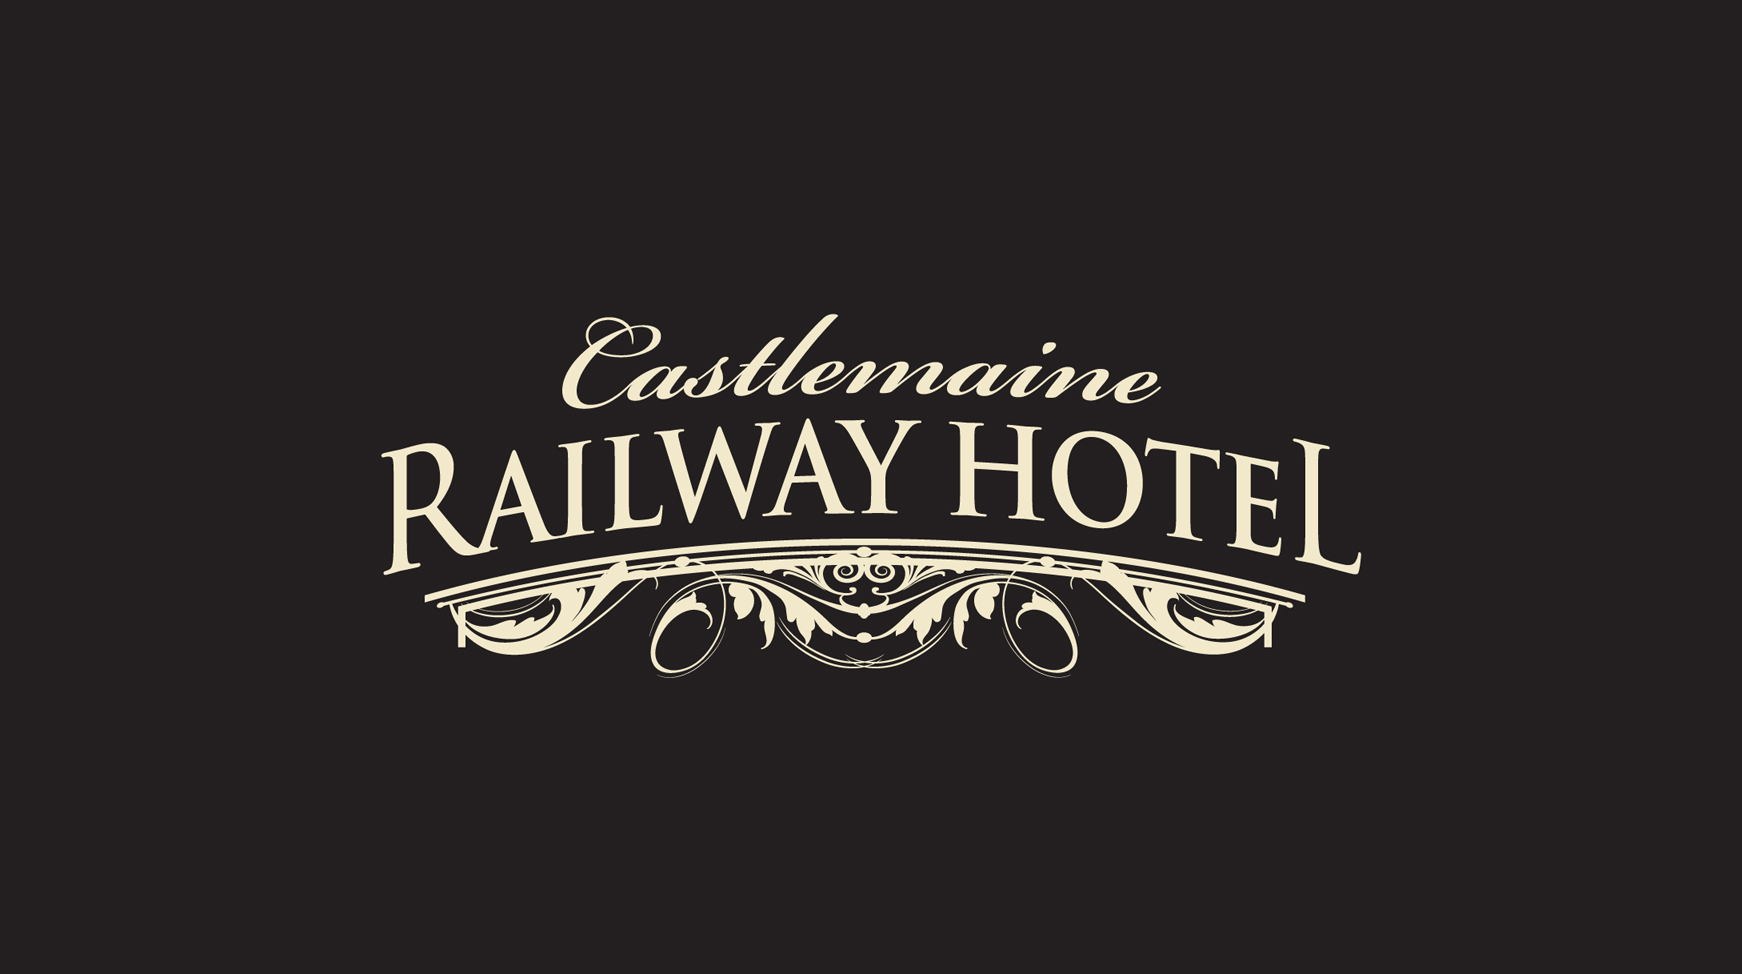 Railway Hotel Castlemaine - Lennox Head Accommodation